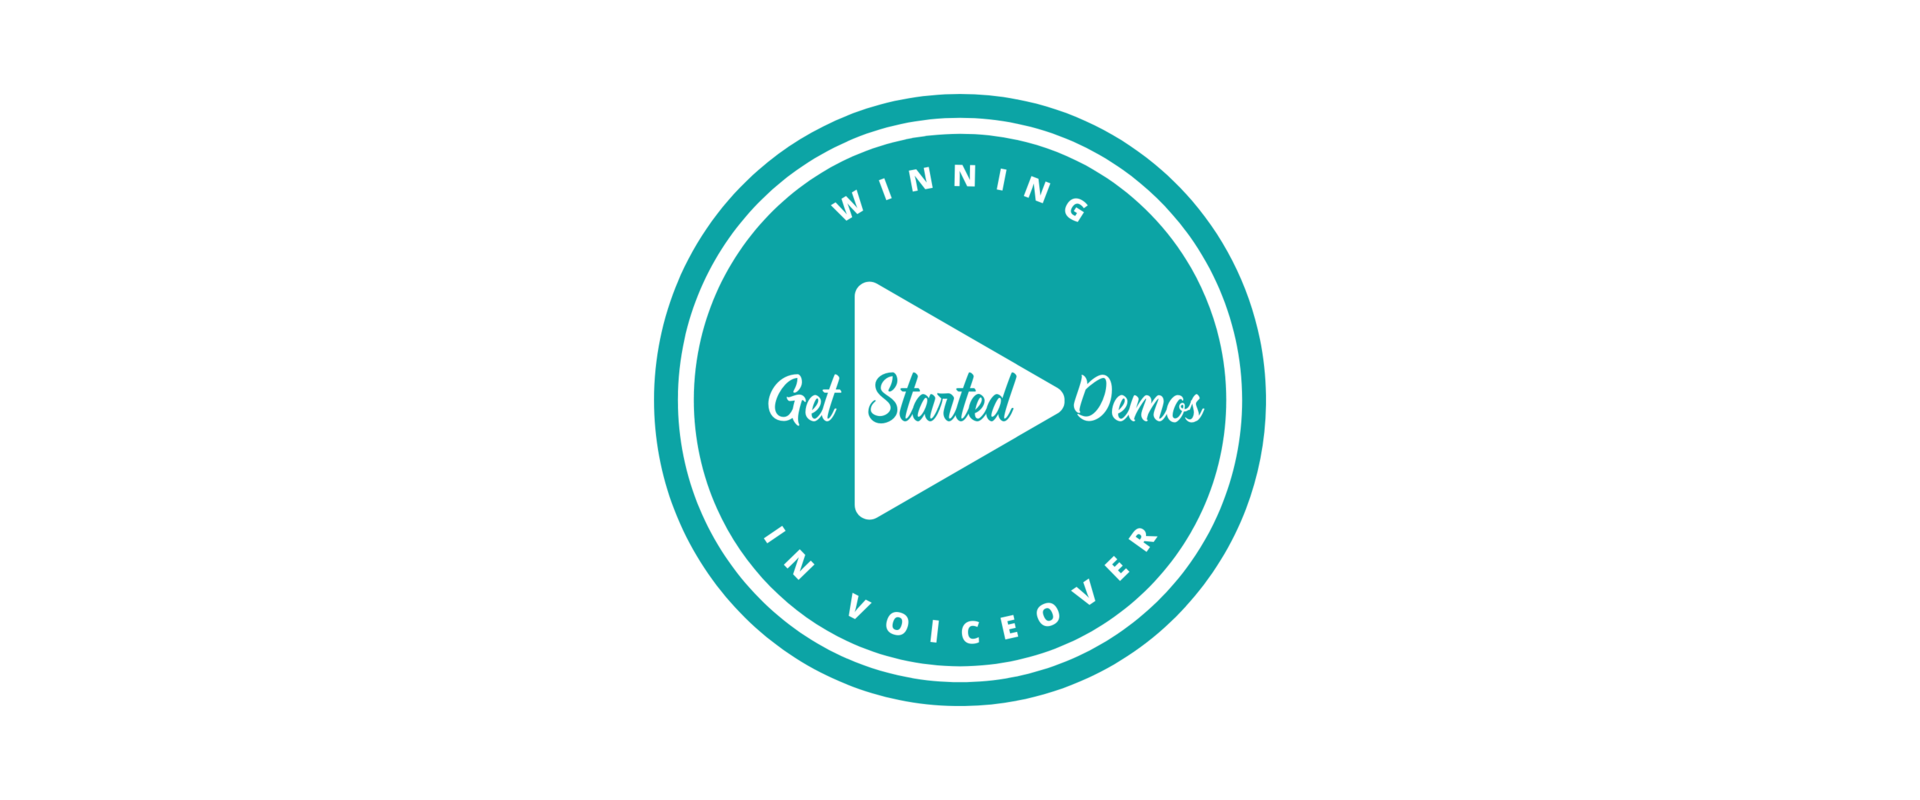 Get Started Demos Logo (2880 × 1200 px)